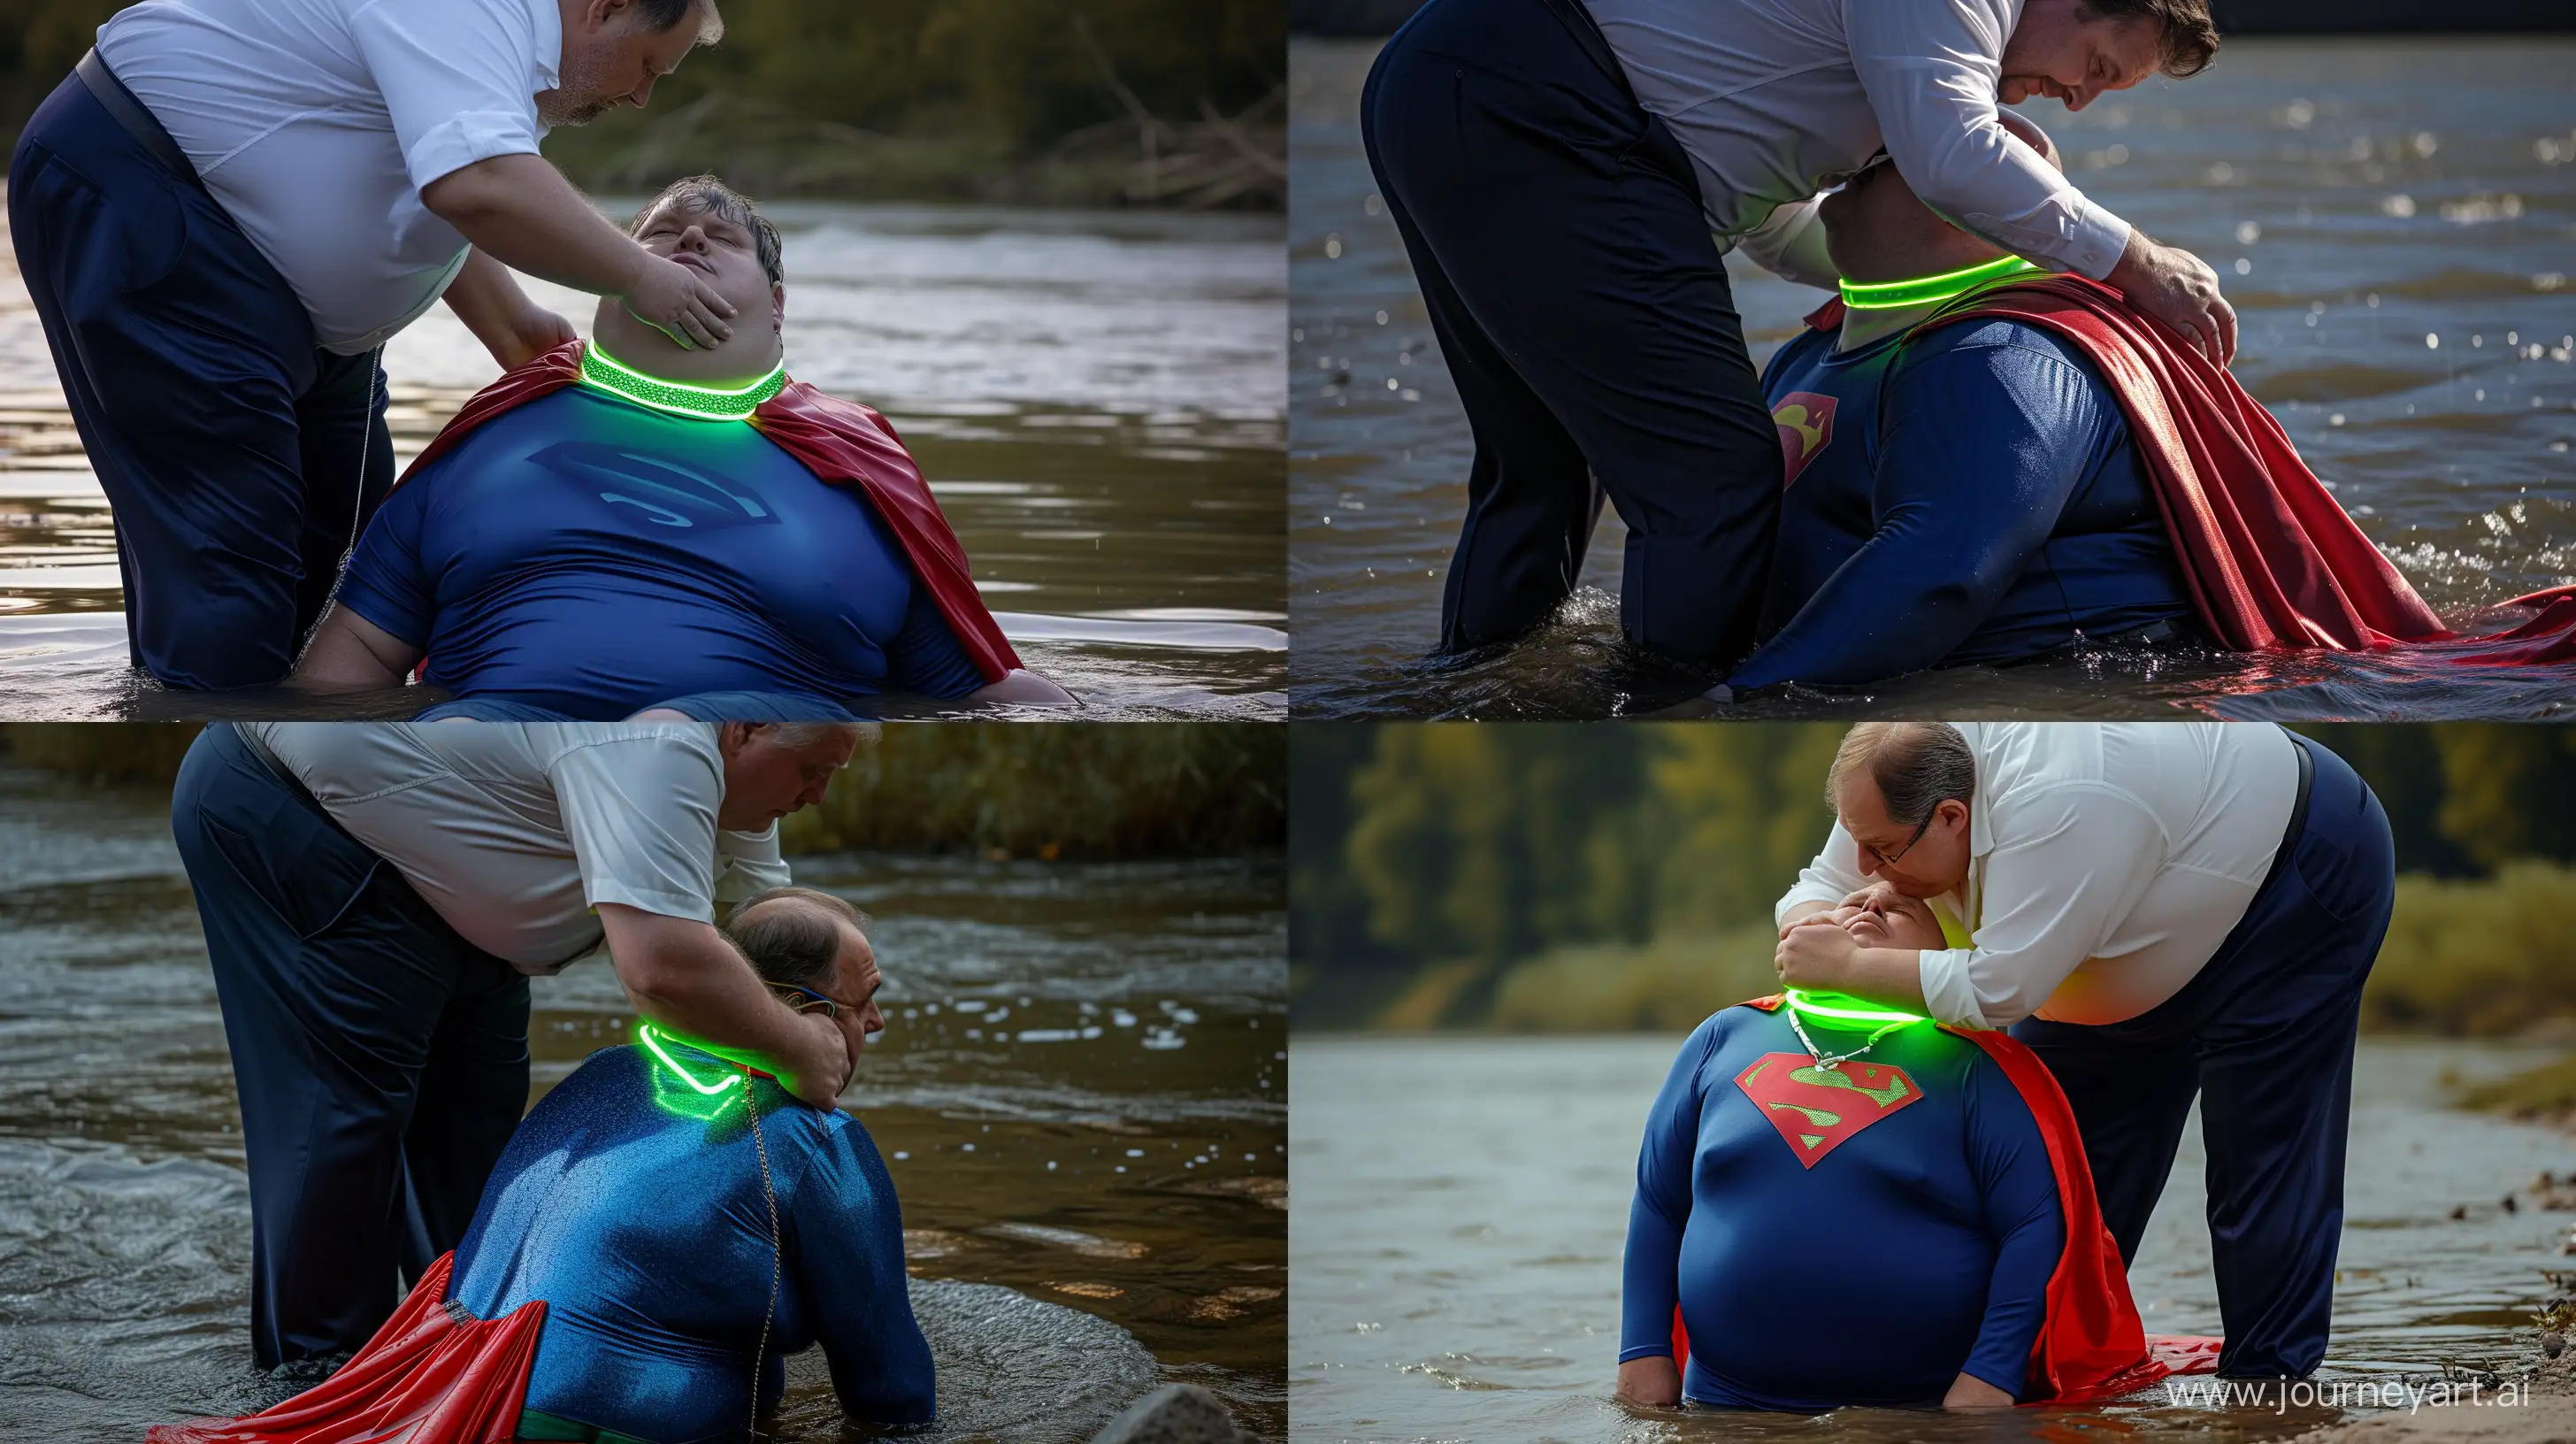 Eccentric-Superhero-Emerges-Man-in-Vibrant-Costume-Receives-Unique-Neon-Dog-Collar